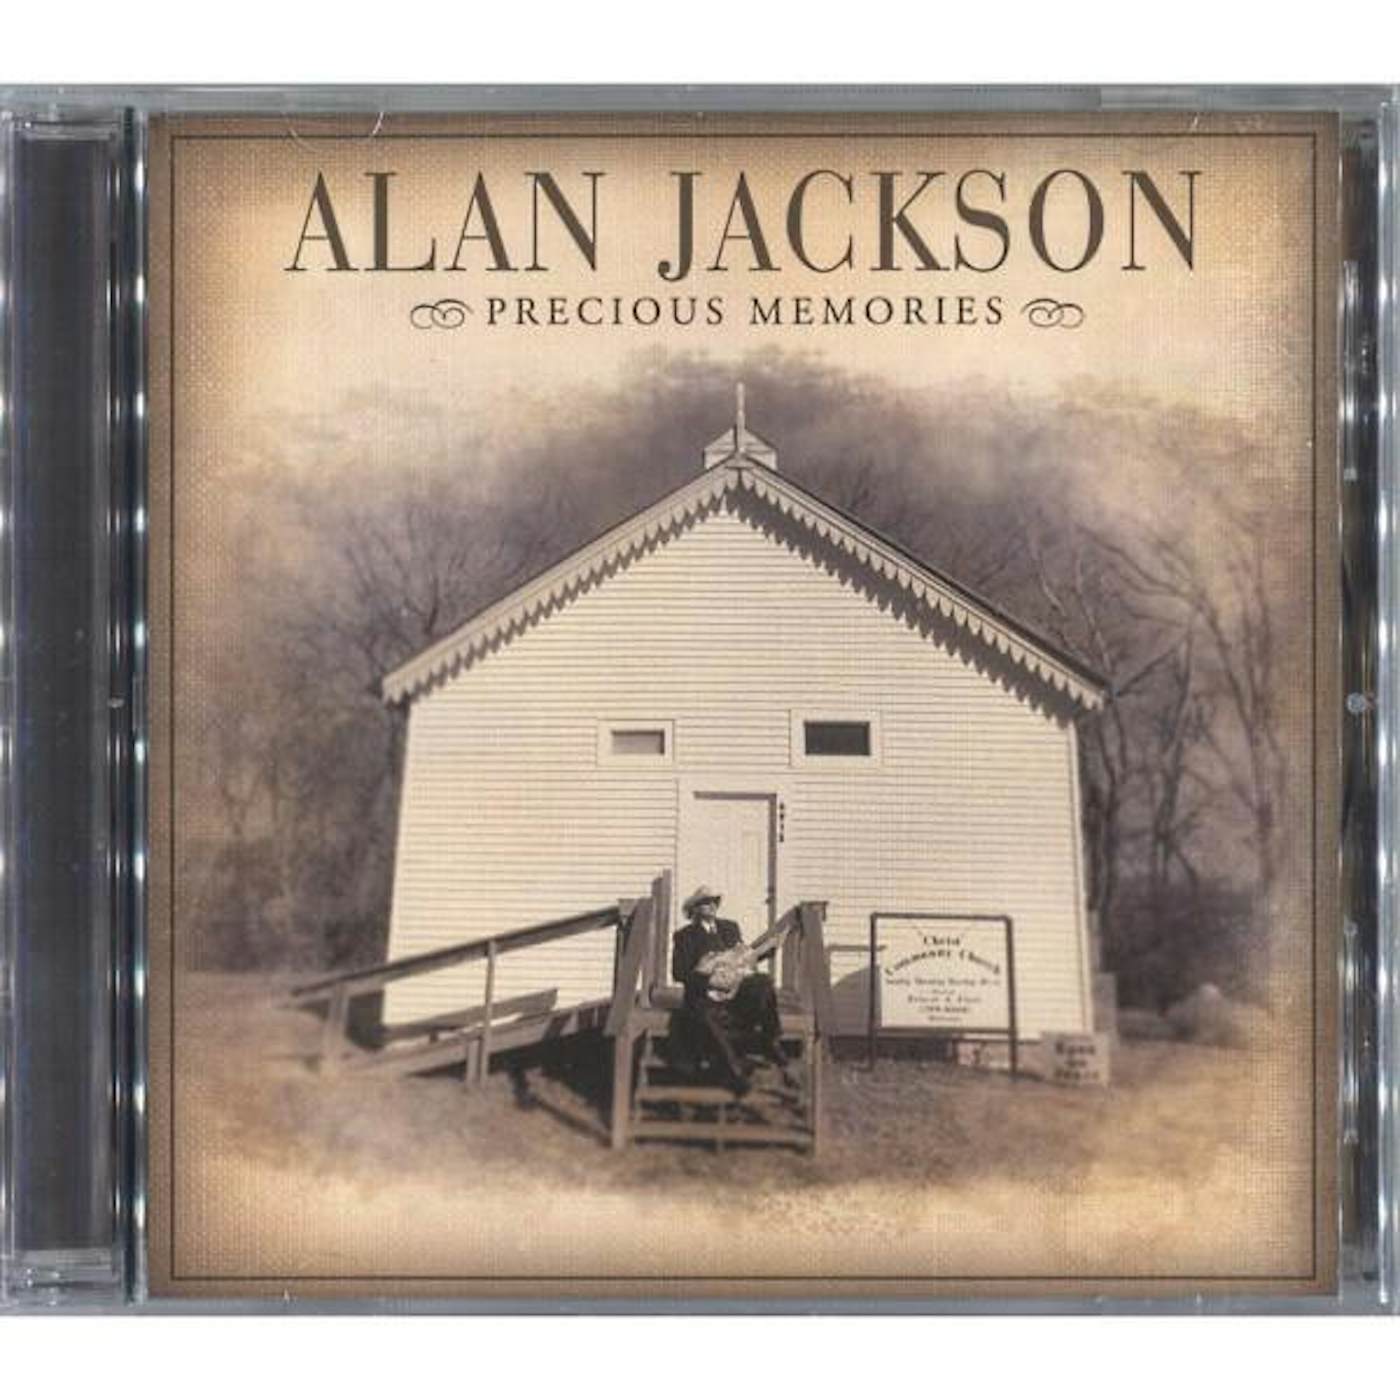 Alan Jackson PRECIOUS MEMORIES CD